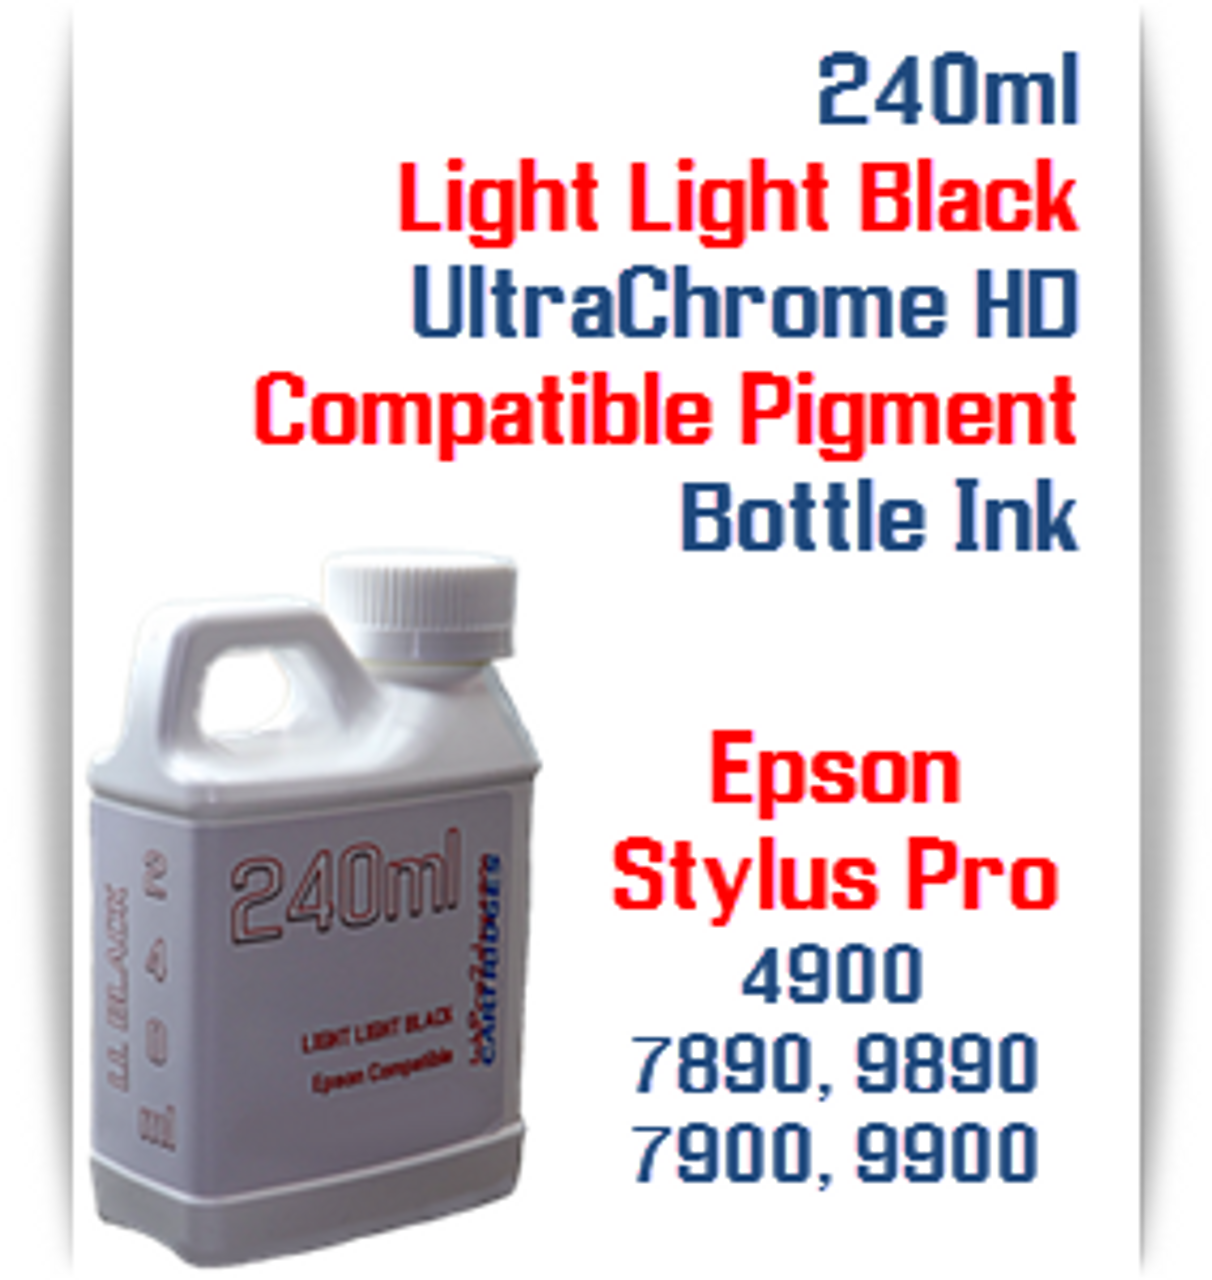 Light Light Black 240ml Bottle Compatible UltraChrome HDR Pigment Ink Epson Stylus Pro 4900, 7890, 9890, 7900, 9900 Printers